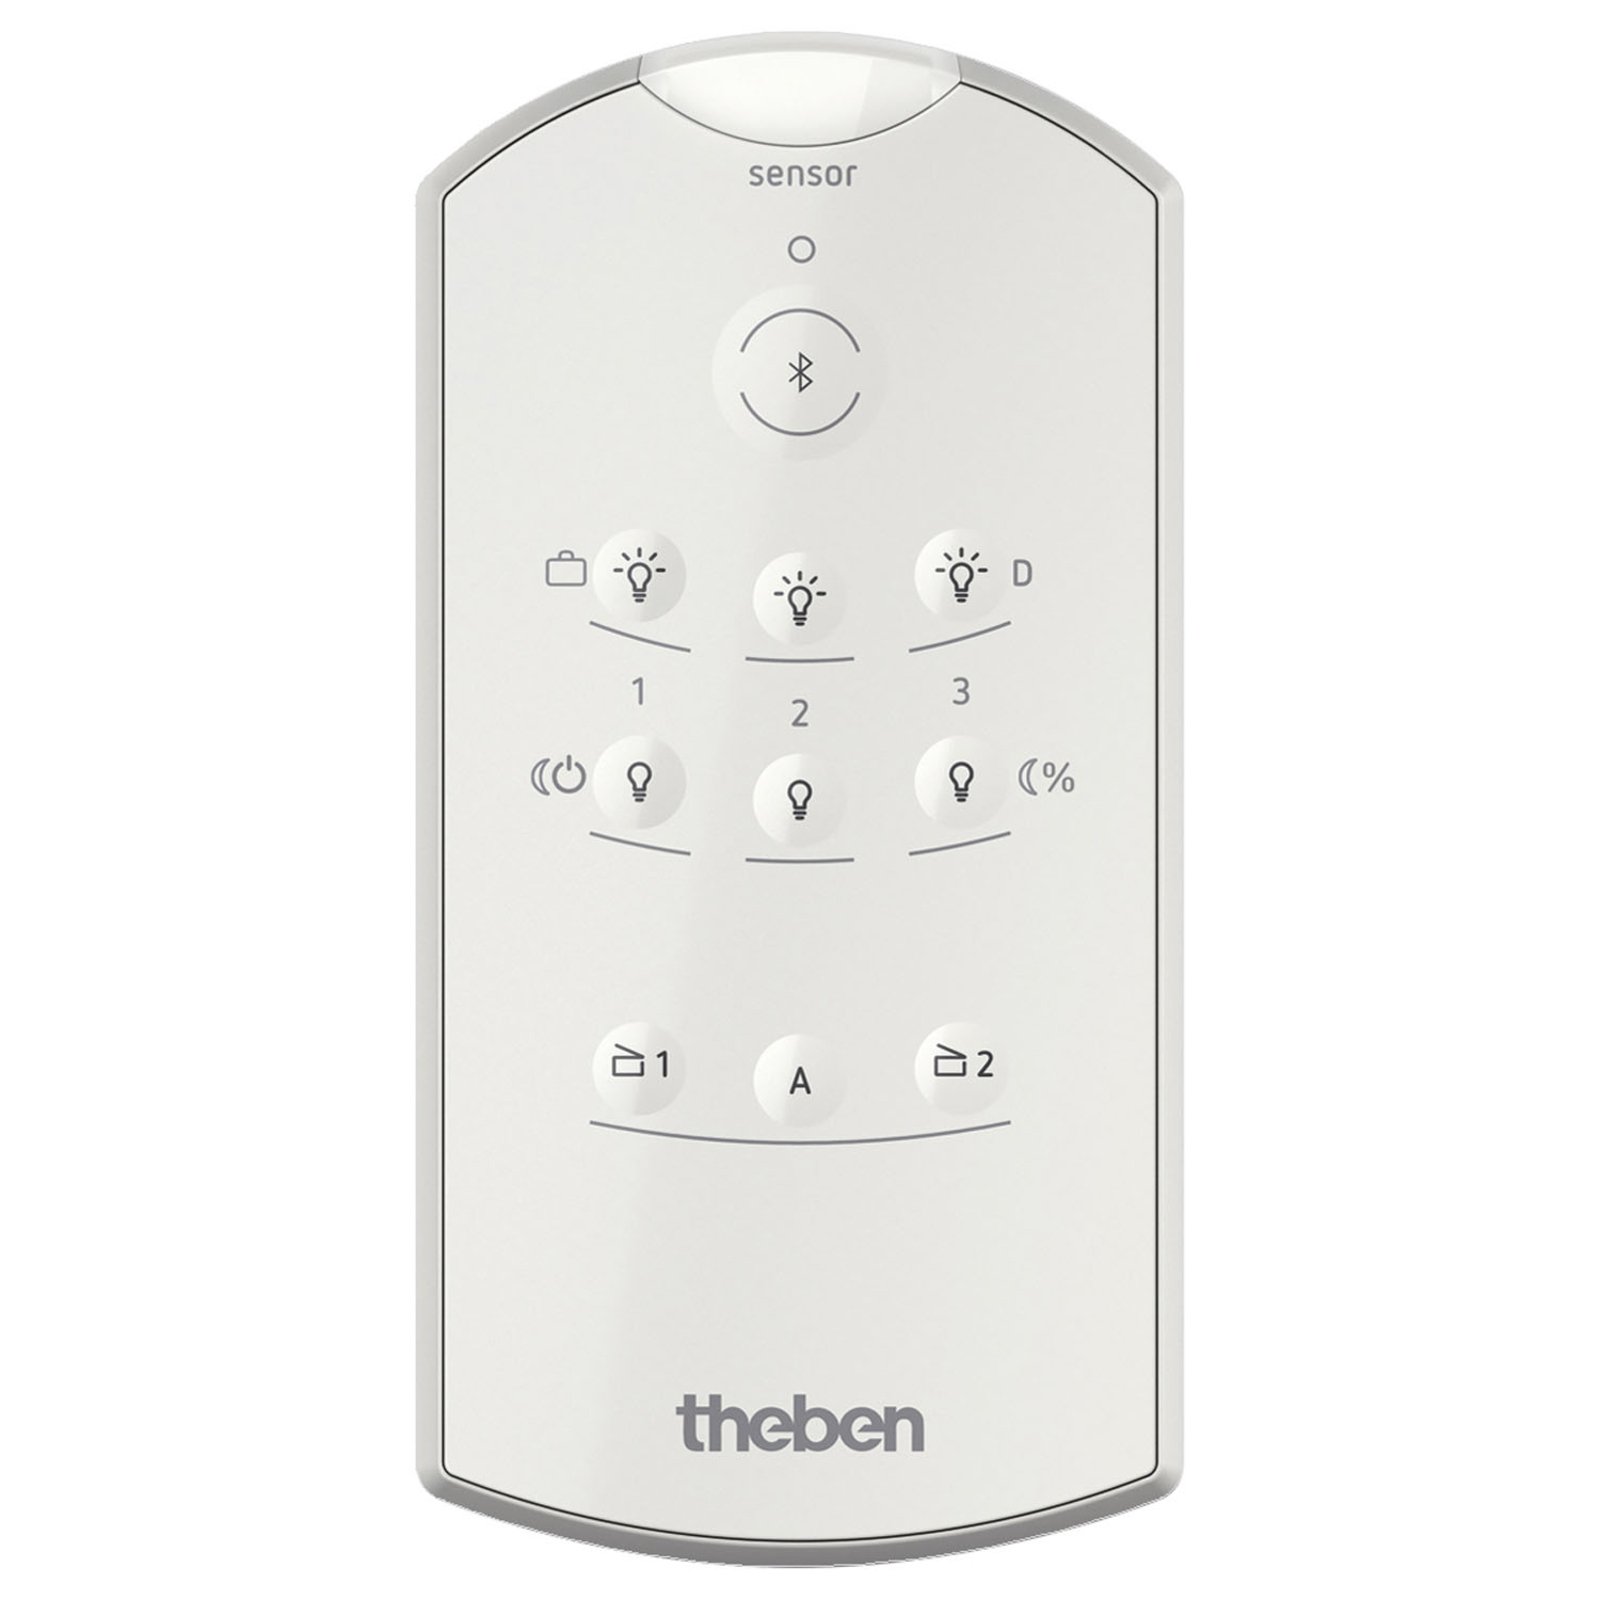 Theben theSenda B app communication remote control